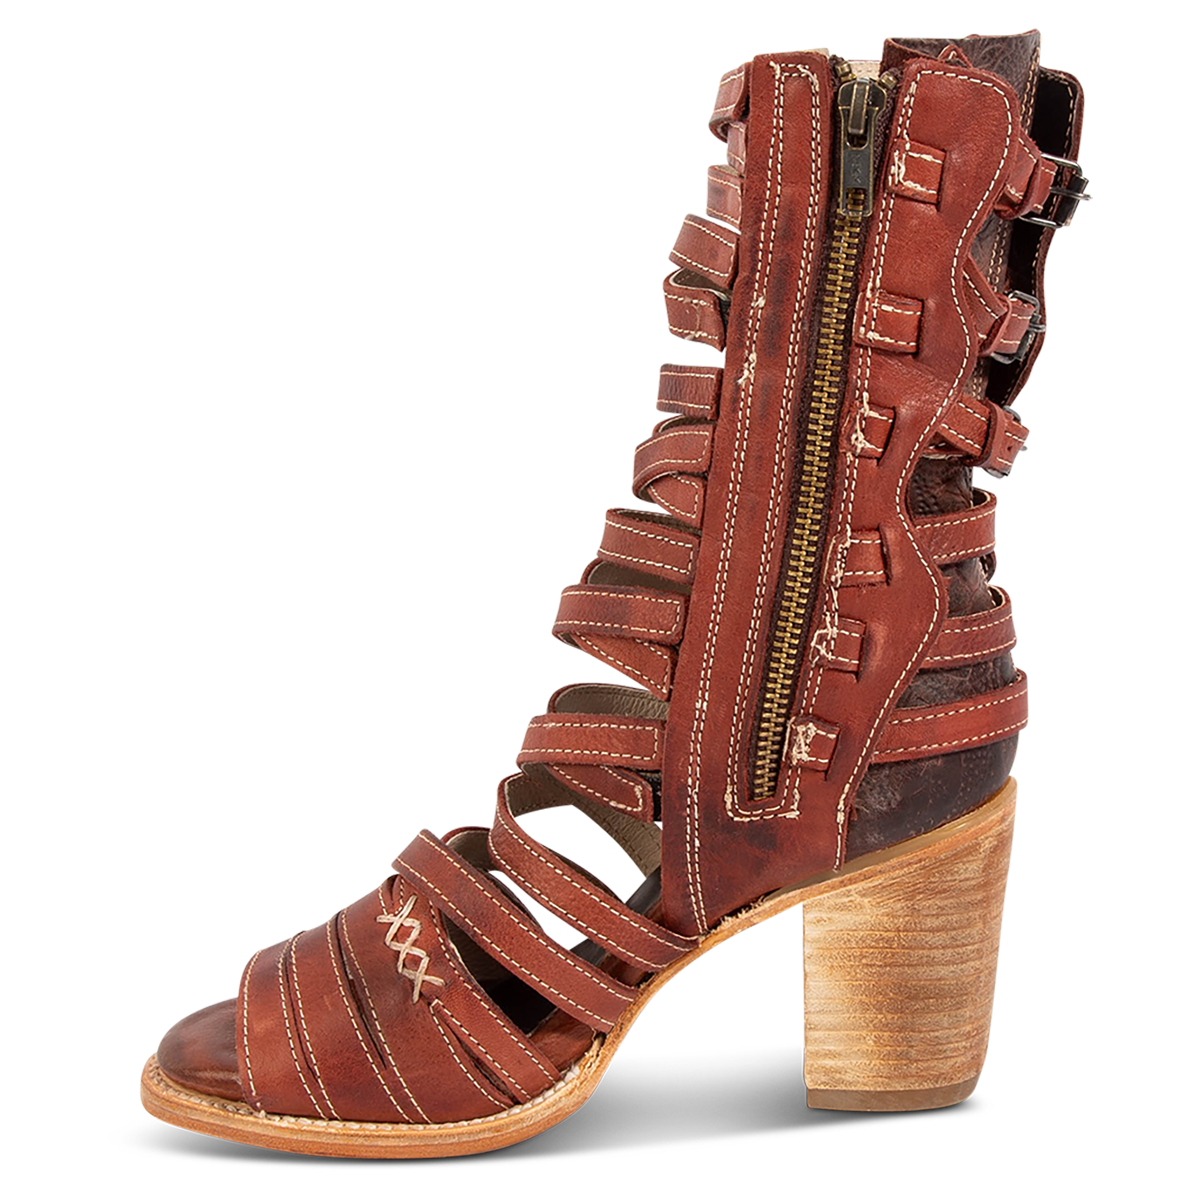 Inside view showing a working brass zipper, block heel and leather straps on FREEBIRD women's Makayla rust leather sandal